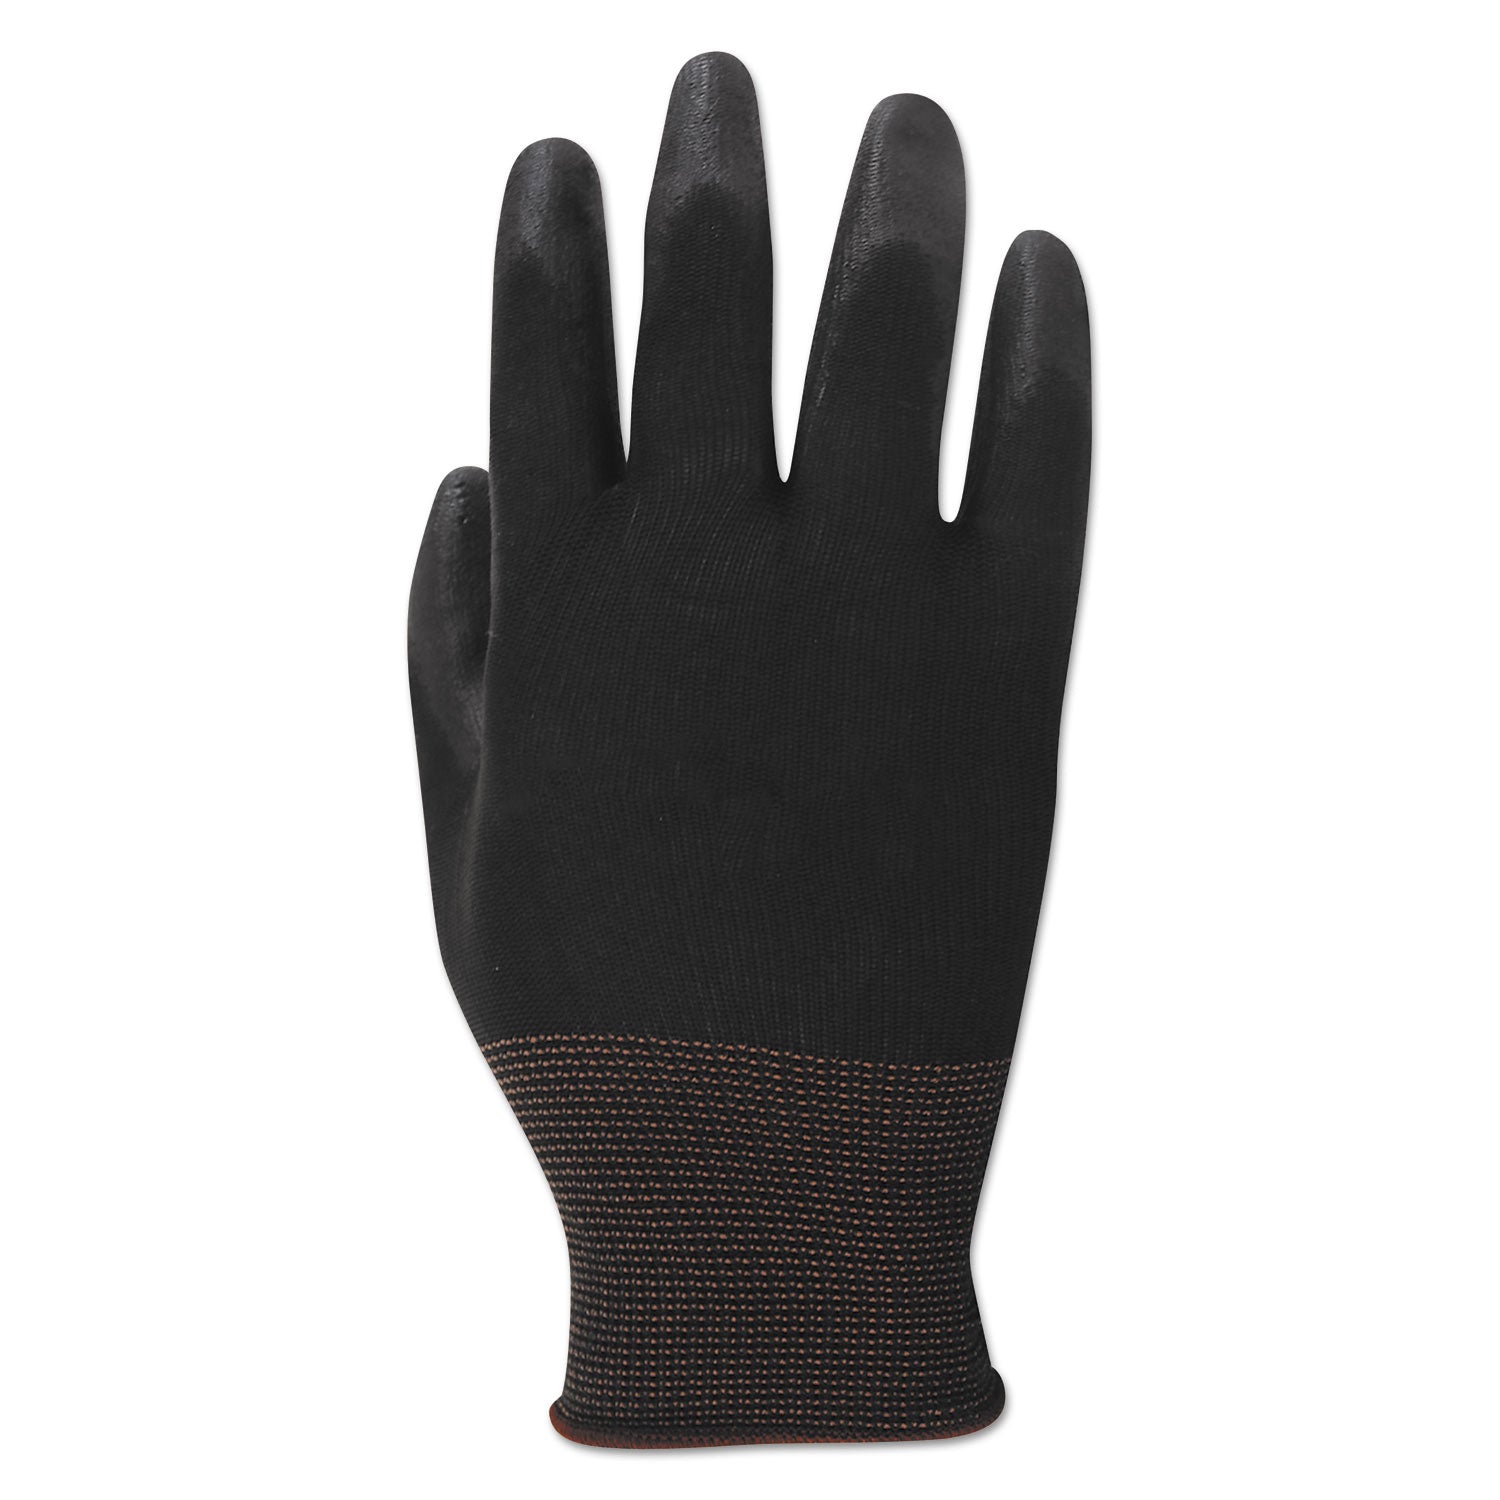 palm-coated-cut-resistant-hppe-glove-salt-and-pepper-black-size-8-medium-dozen_bwk000298 - 2